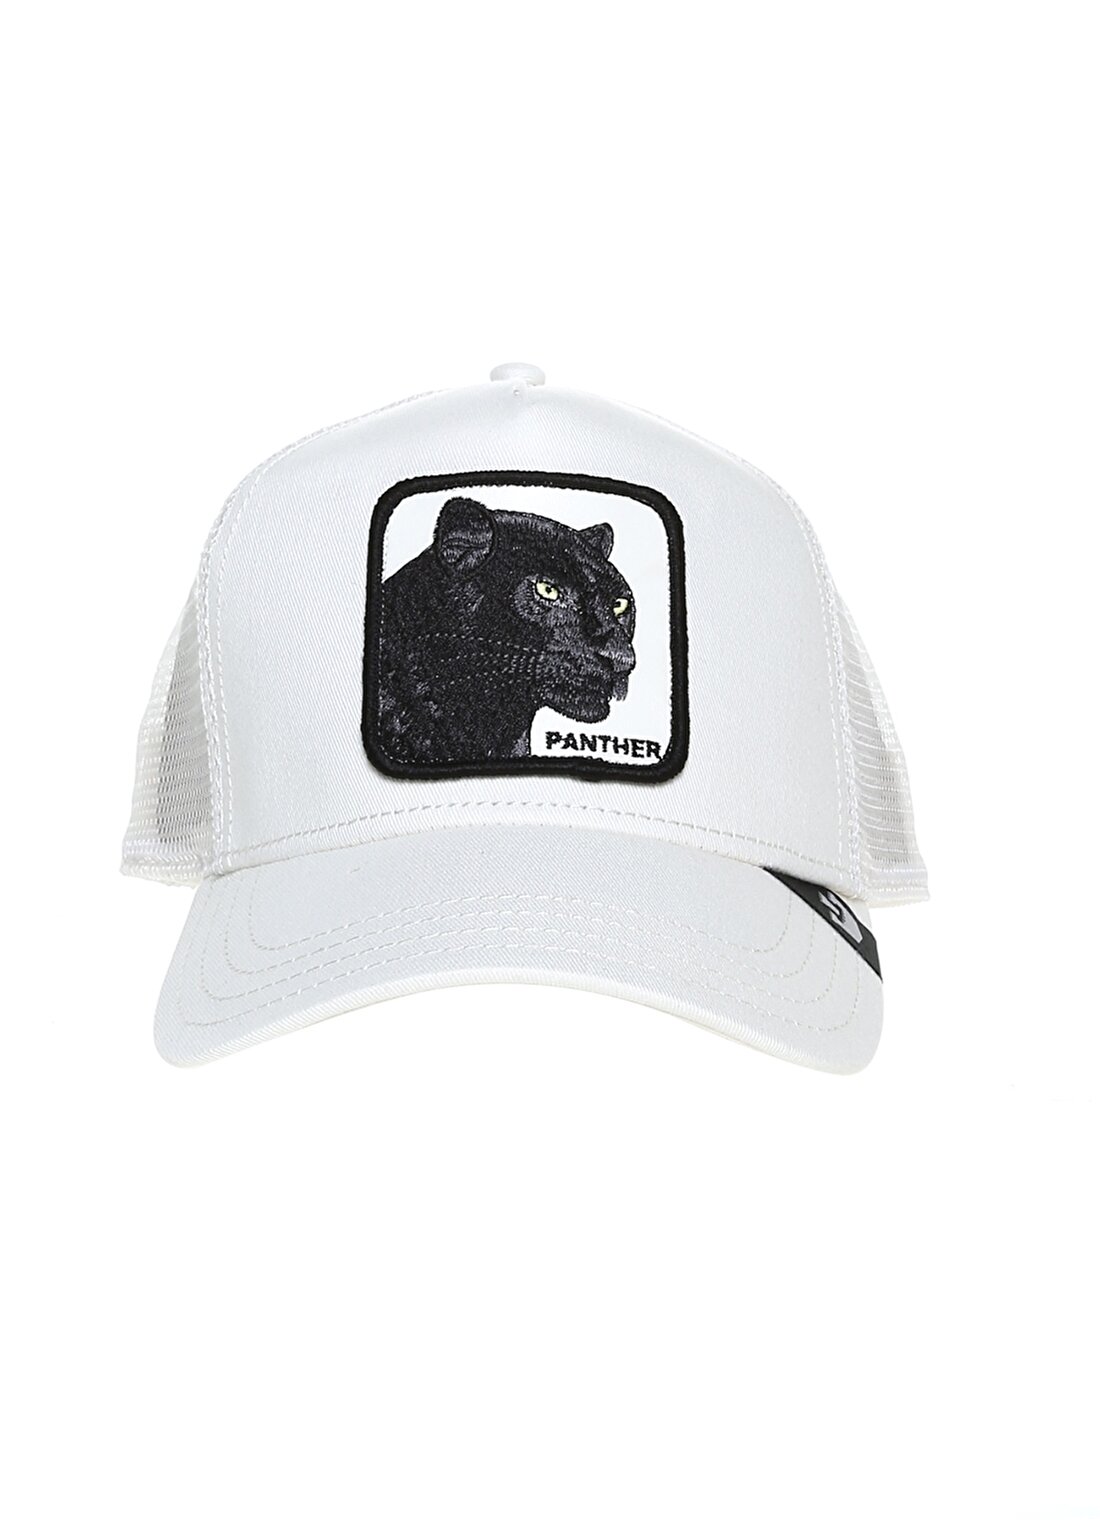 Goorin Bros Beyaz Unisex Şapka 101-0381 The Panther